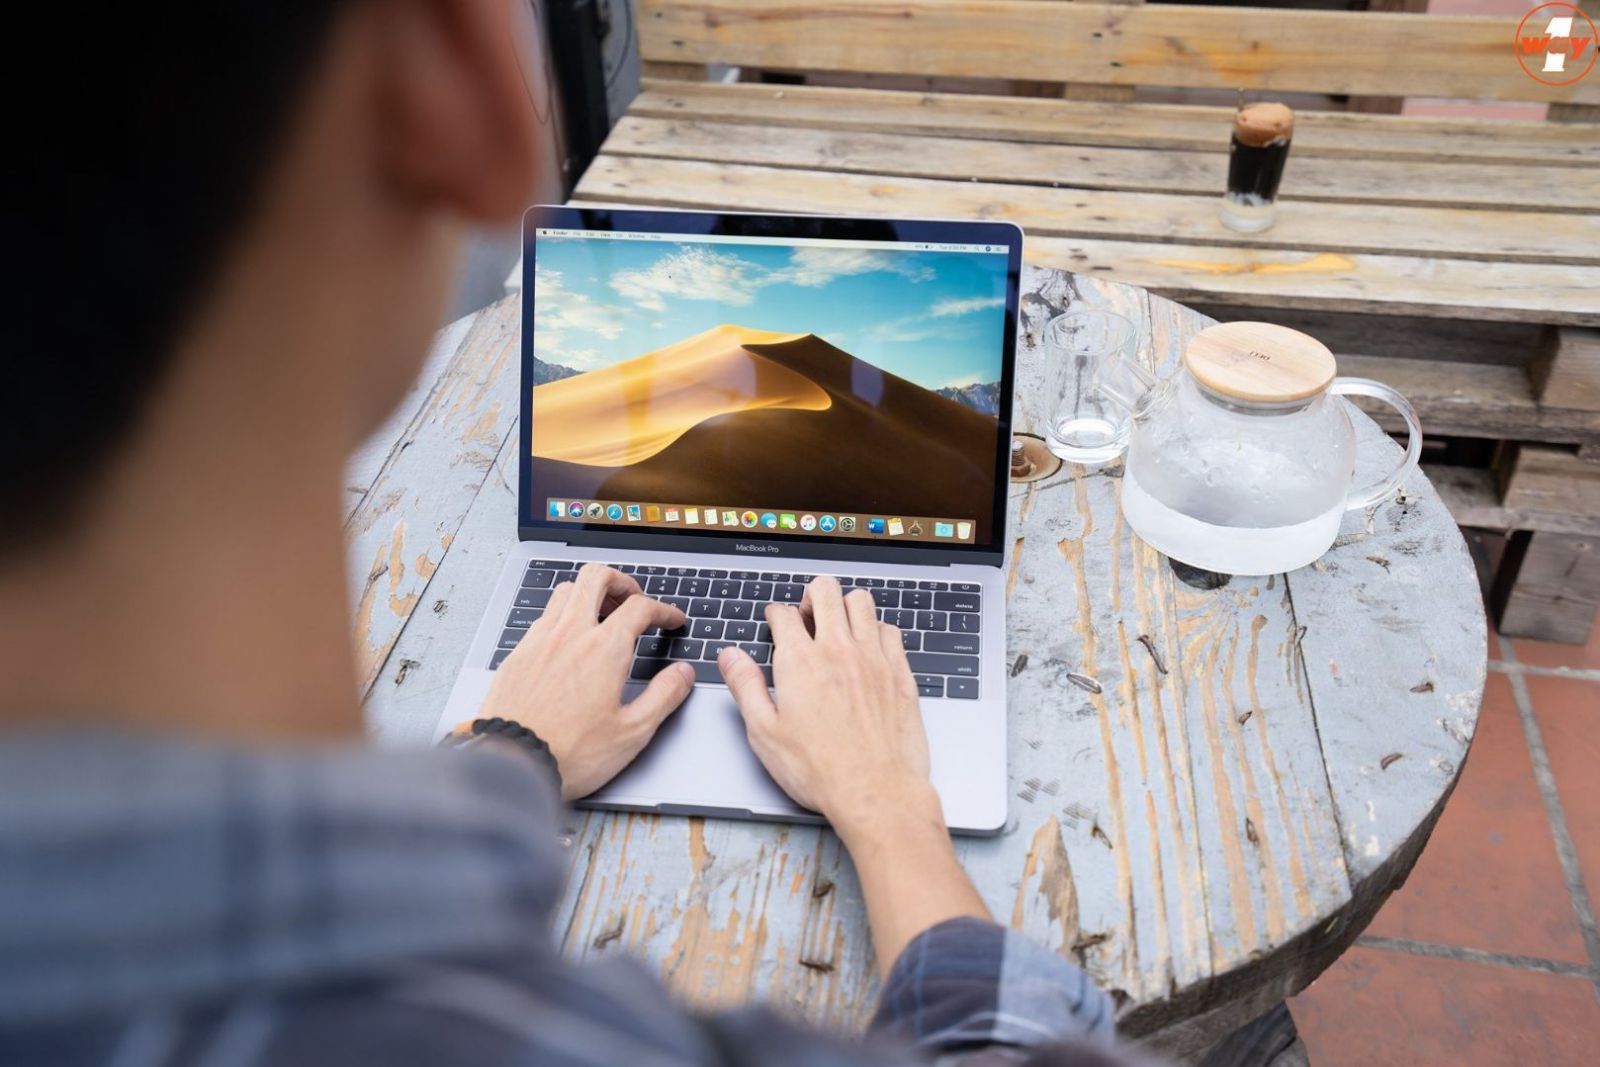 MacBook Pro i5 13 inch cũ đời 2017 - MPXT2